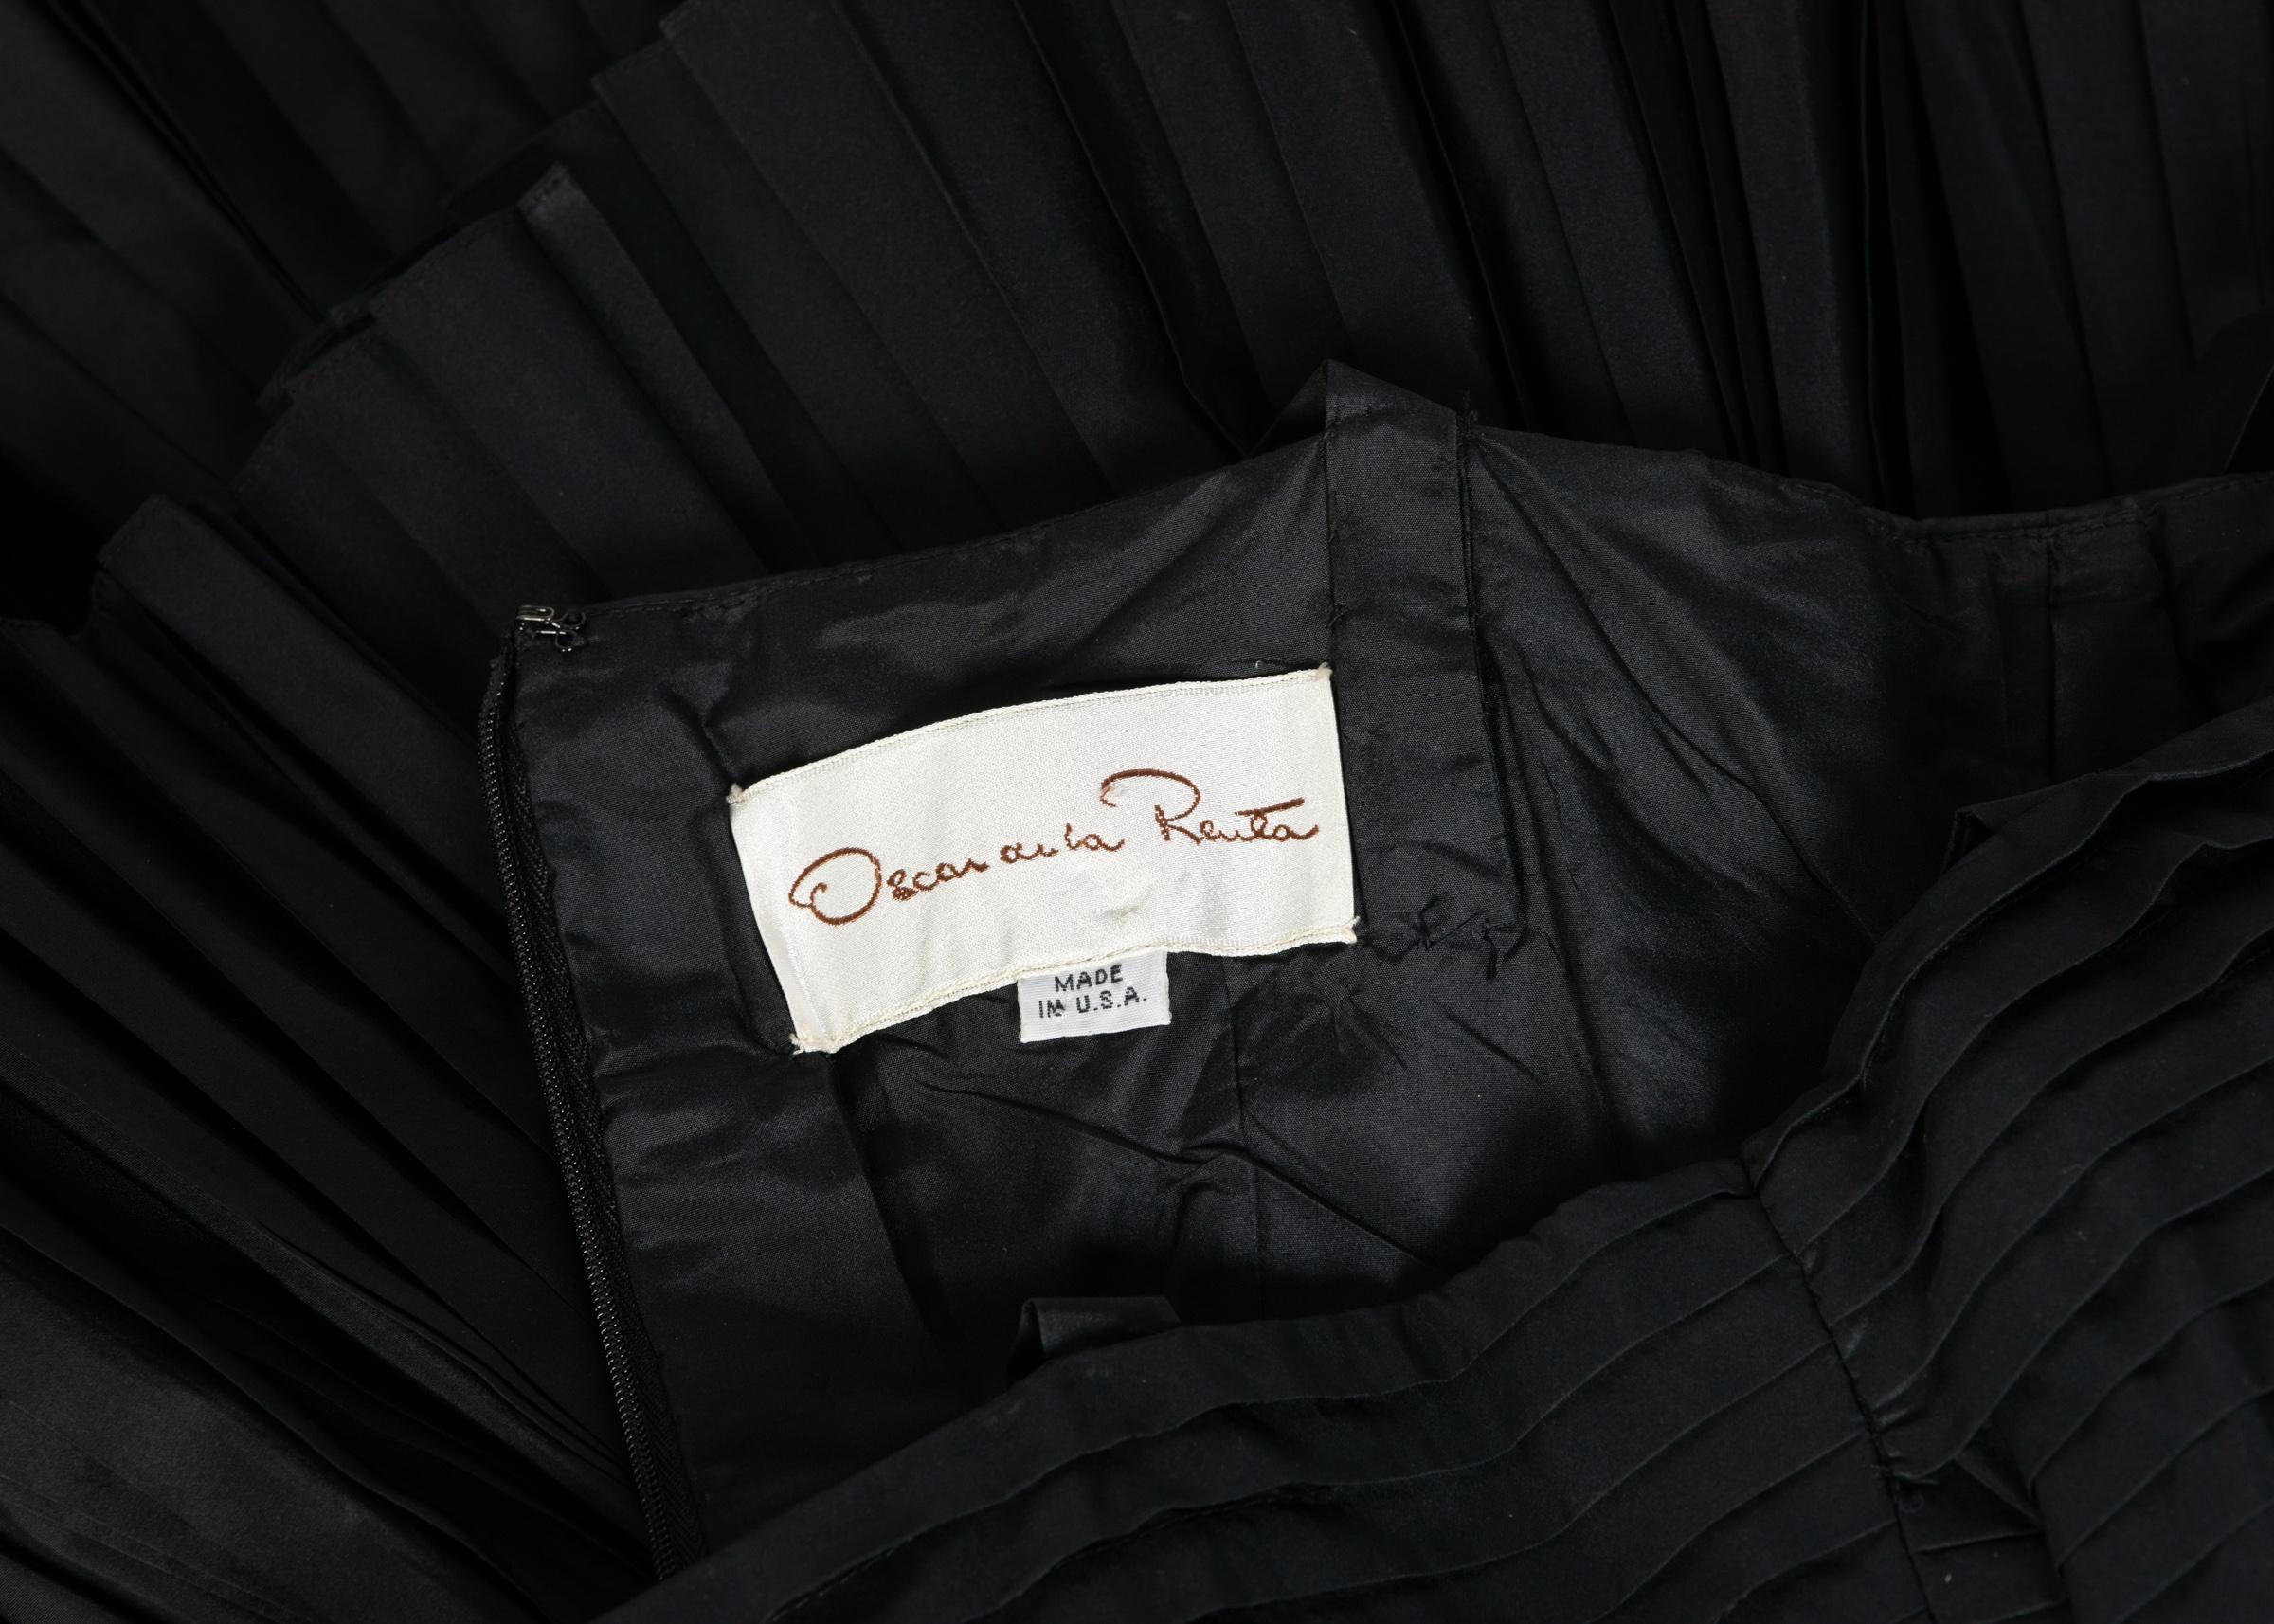 Oscar de la Renta Black Silk Taffeta Pleated Ruffle Cocktail Dress, 1980s For Sale 3